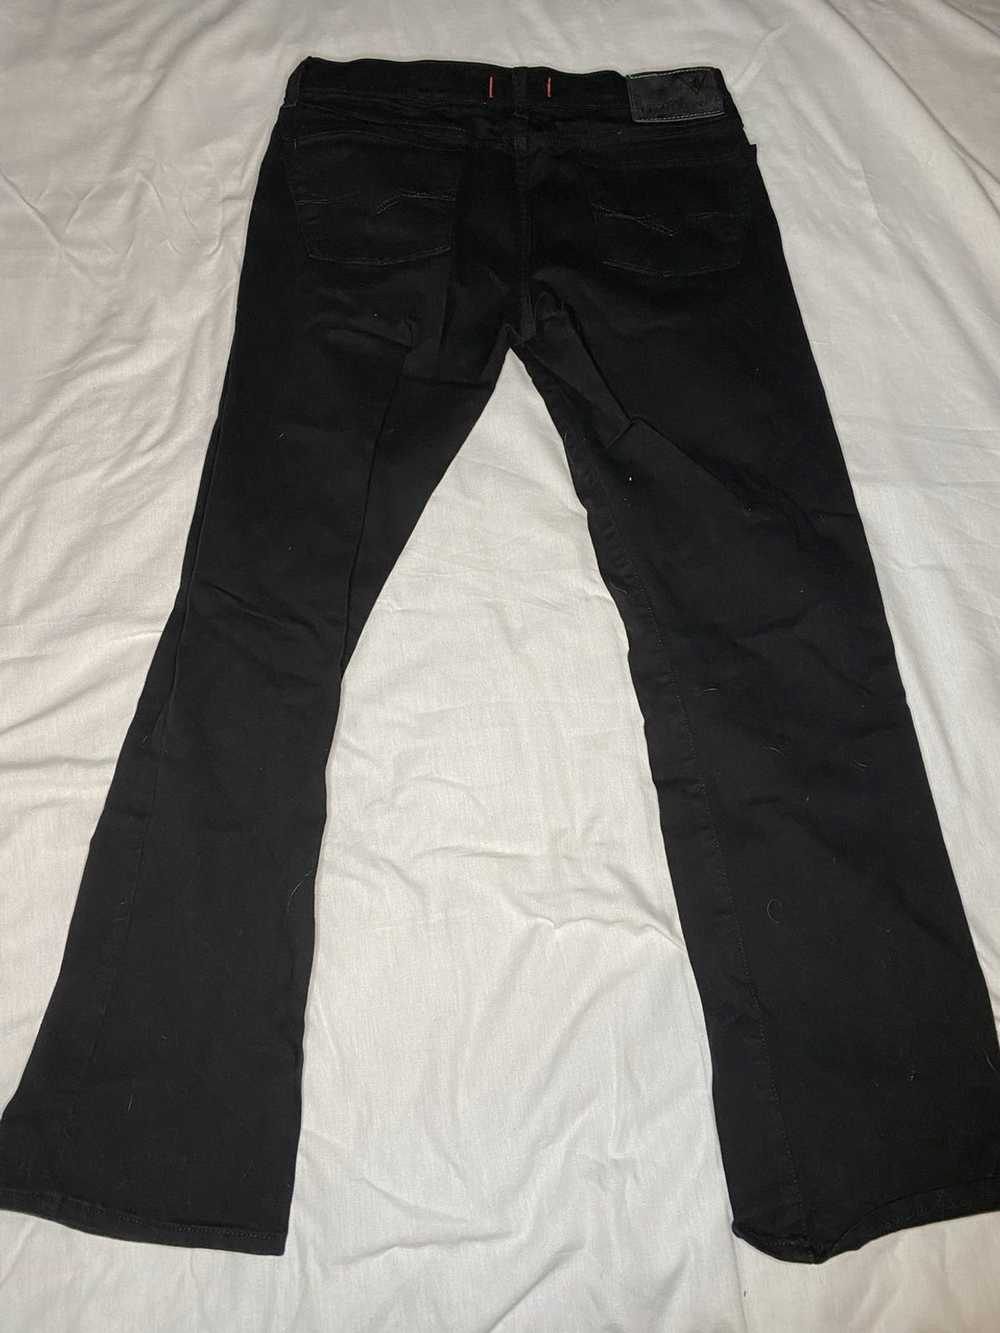 Guess Guess Black Denim Jeans - image 5